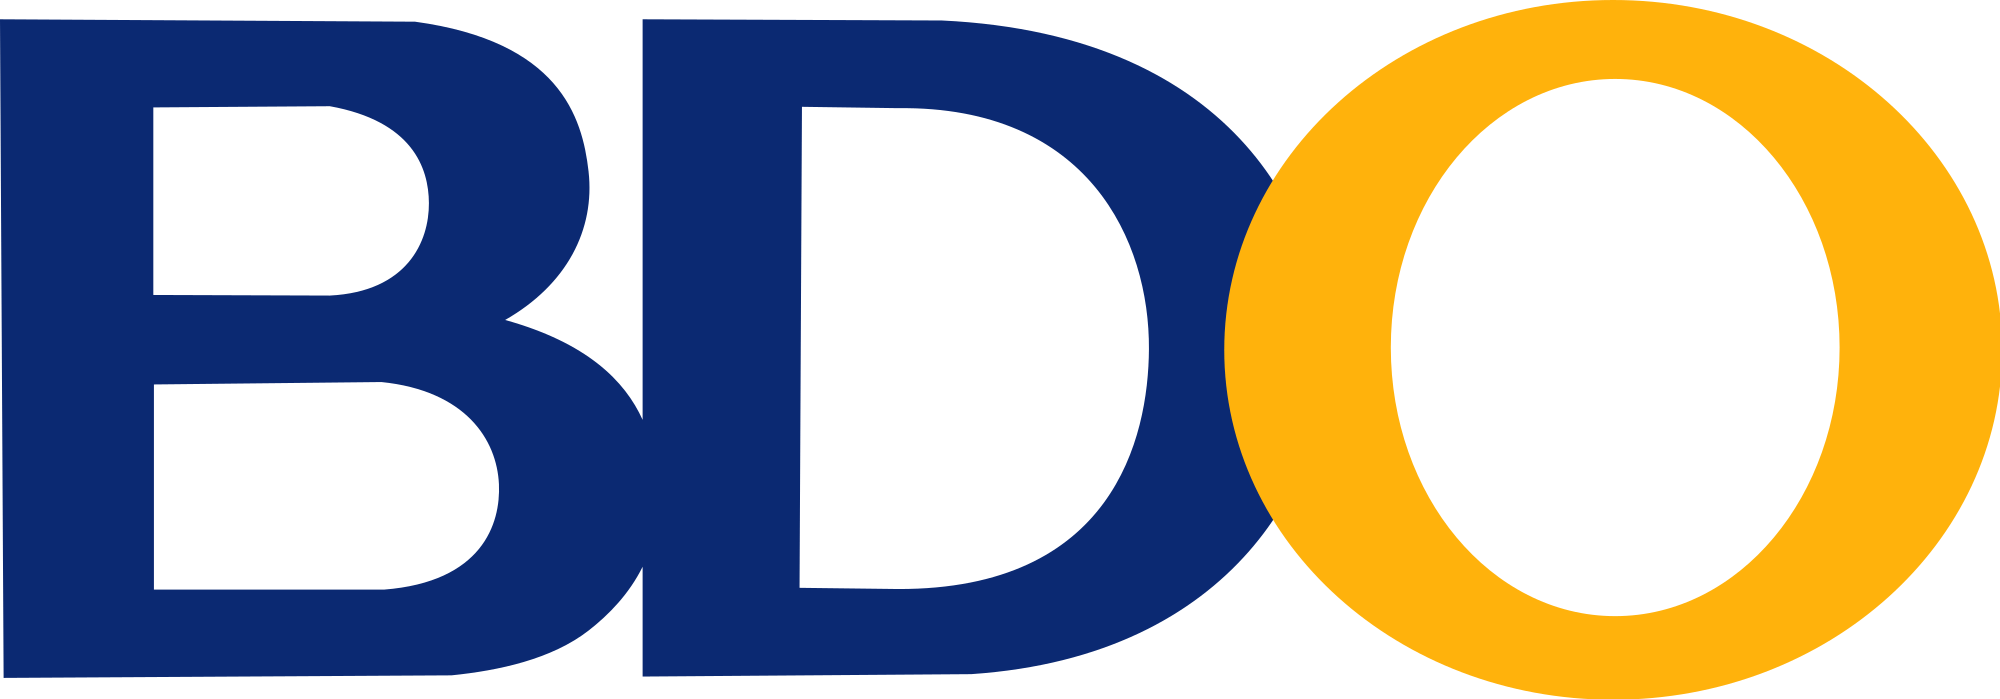 BDO Logo - File:BDO Unibank (logo).svg - Wikimedia Commons